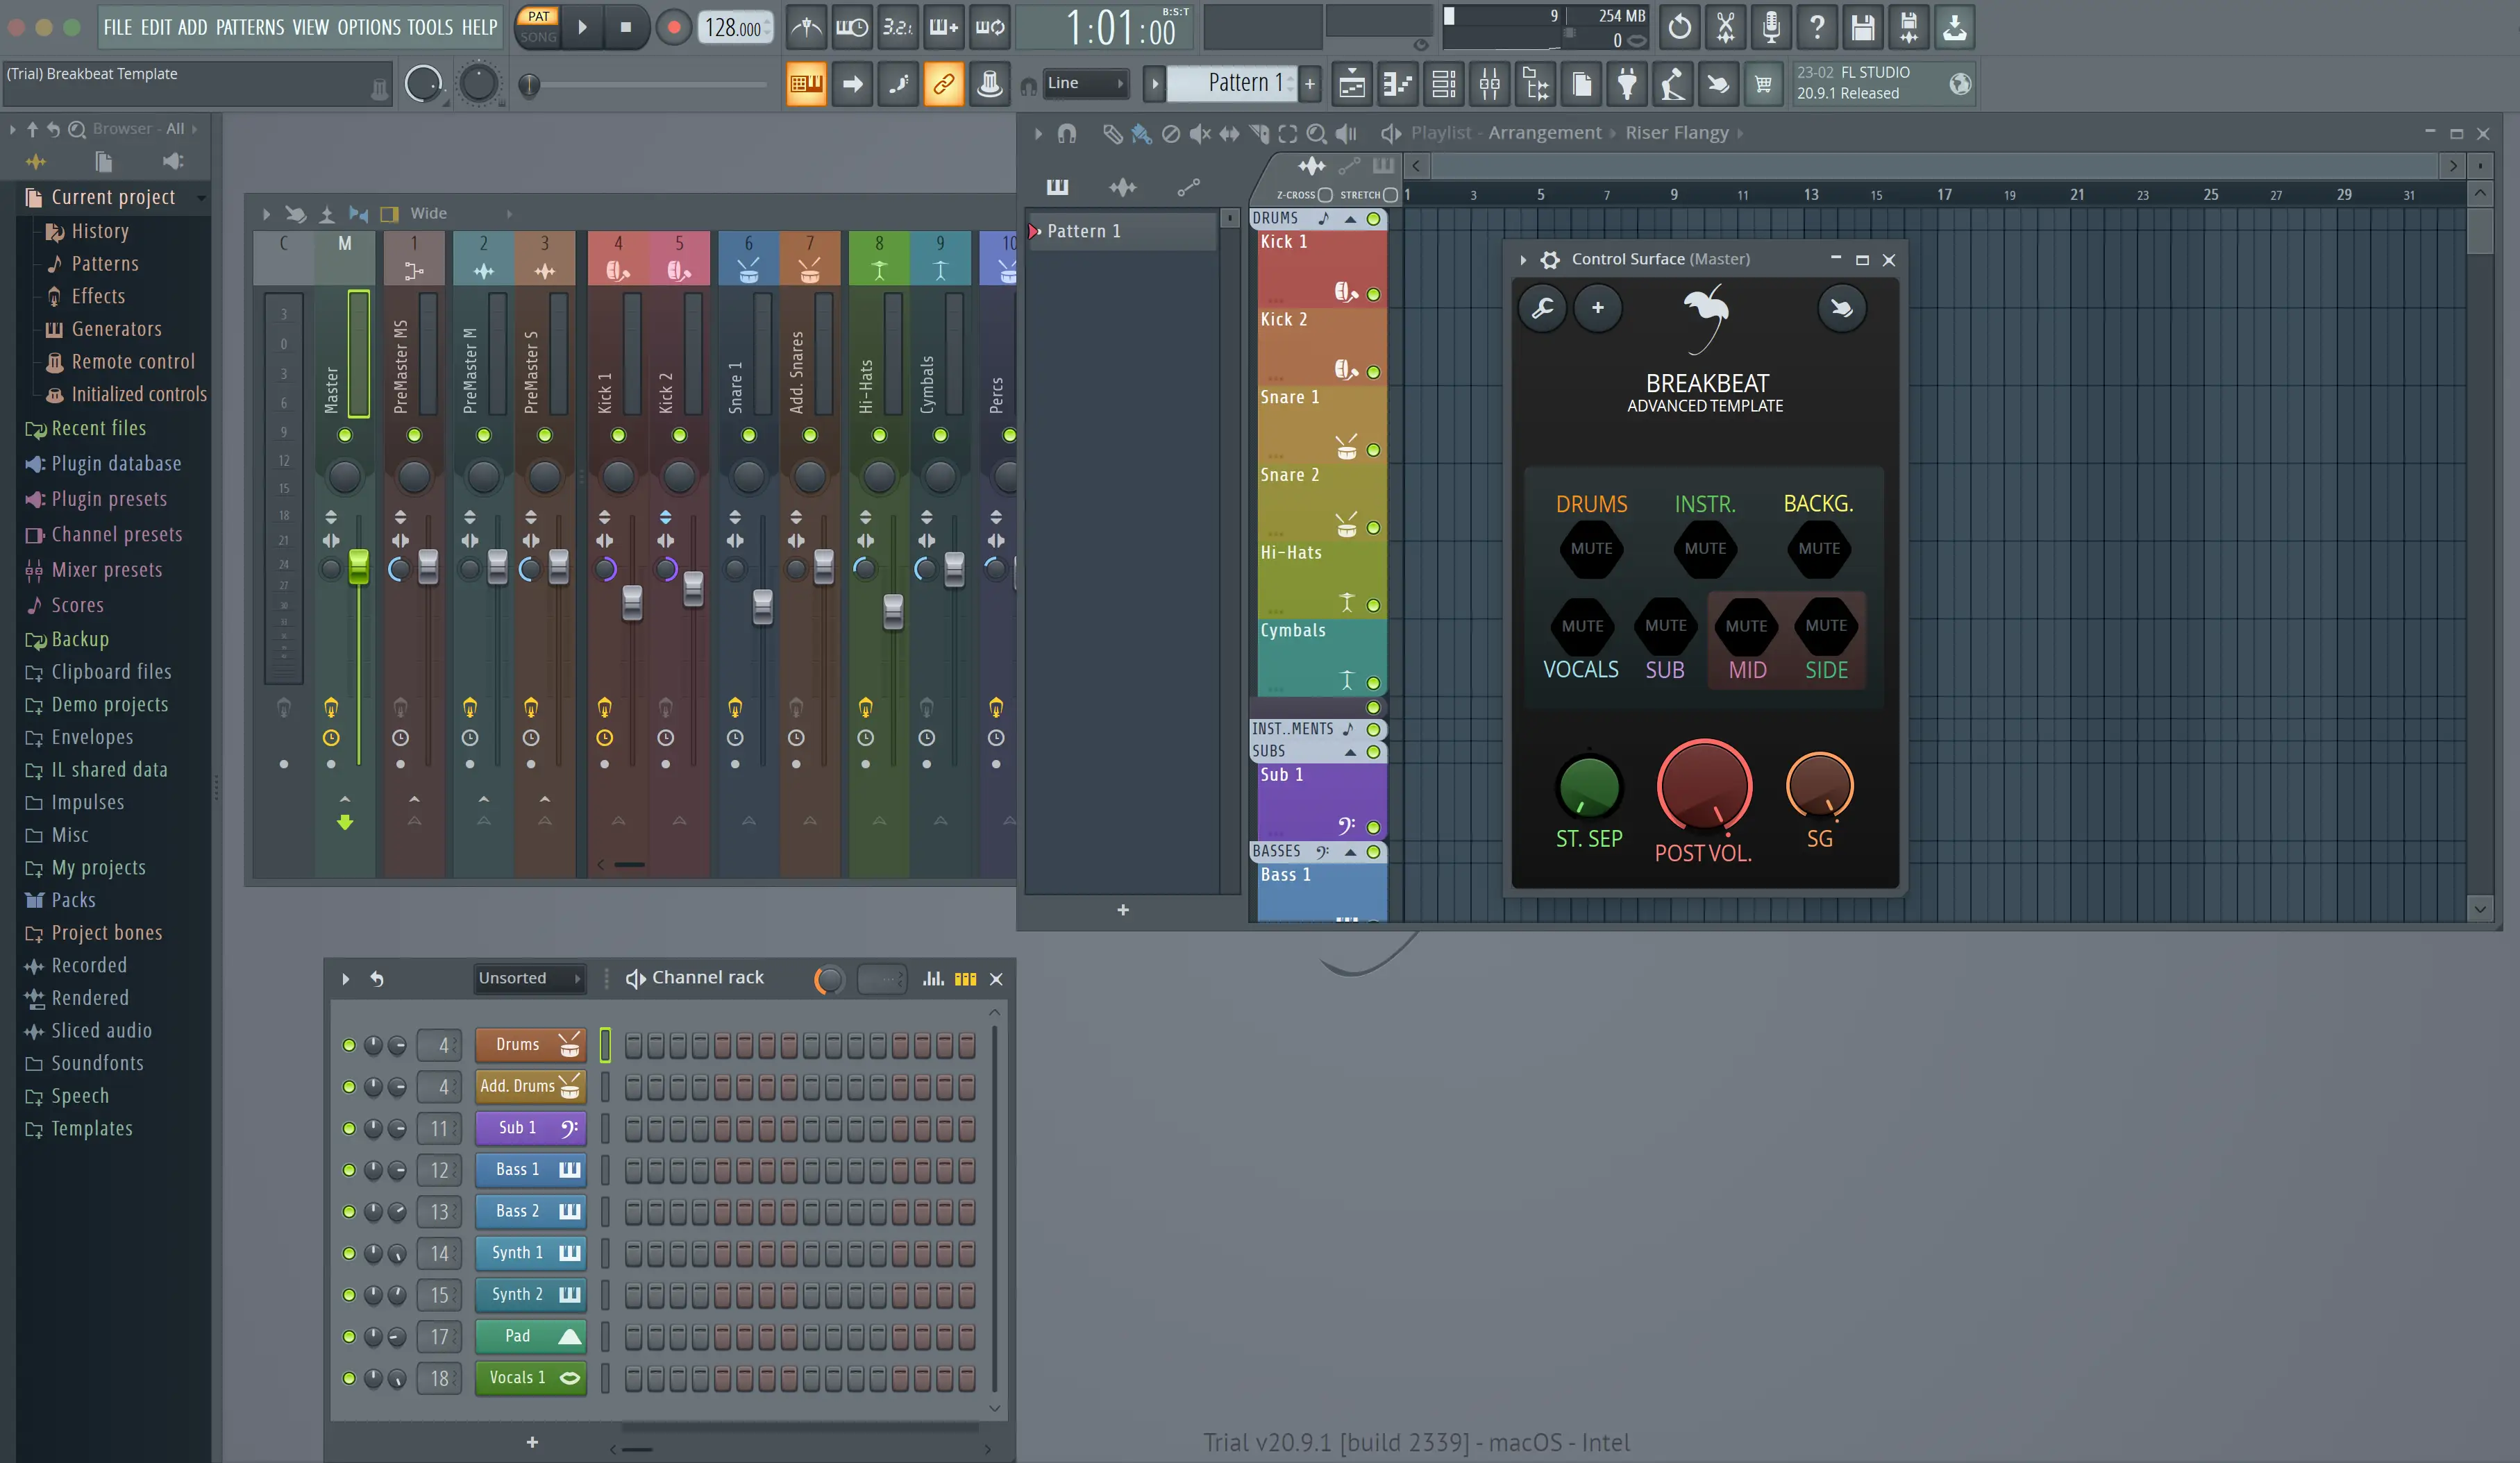 FL studio mix and edit window